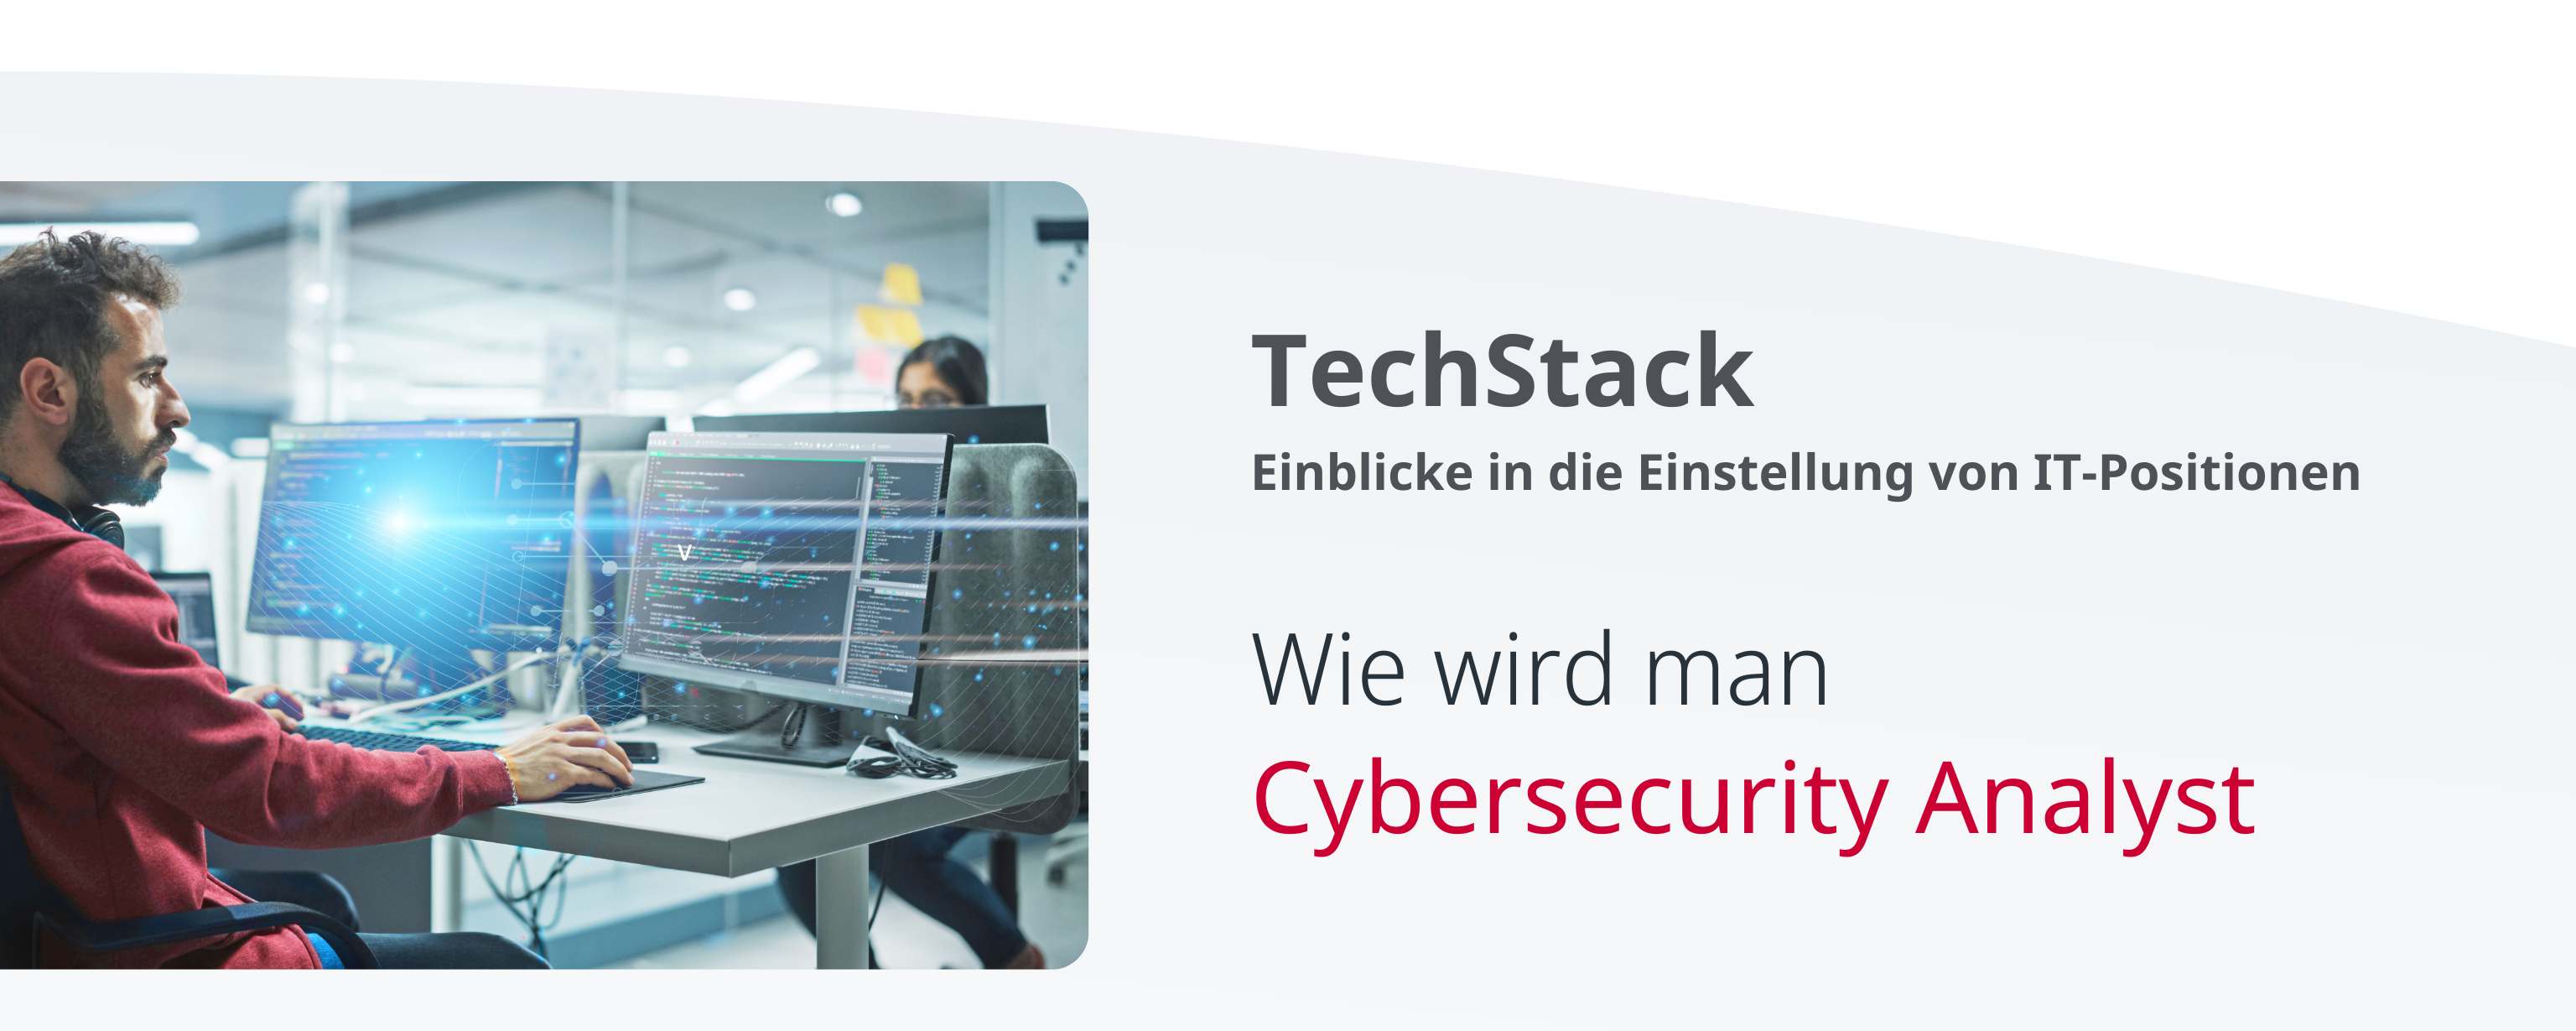 DE tech campaign-Blog visual AEM - de-techstack-cyber-security-analyst